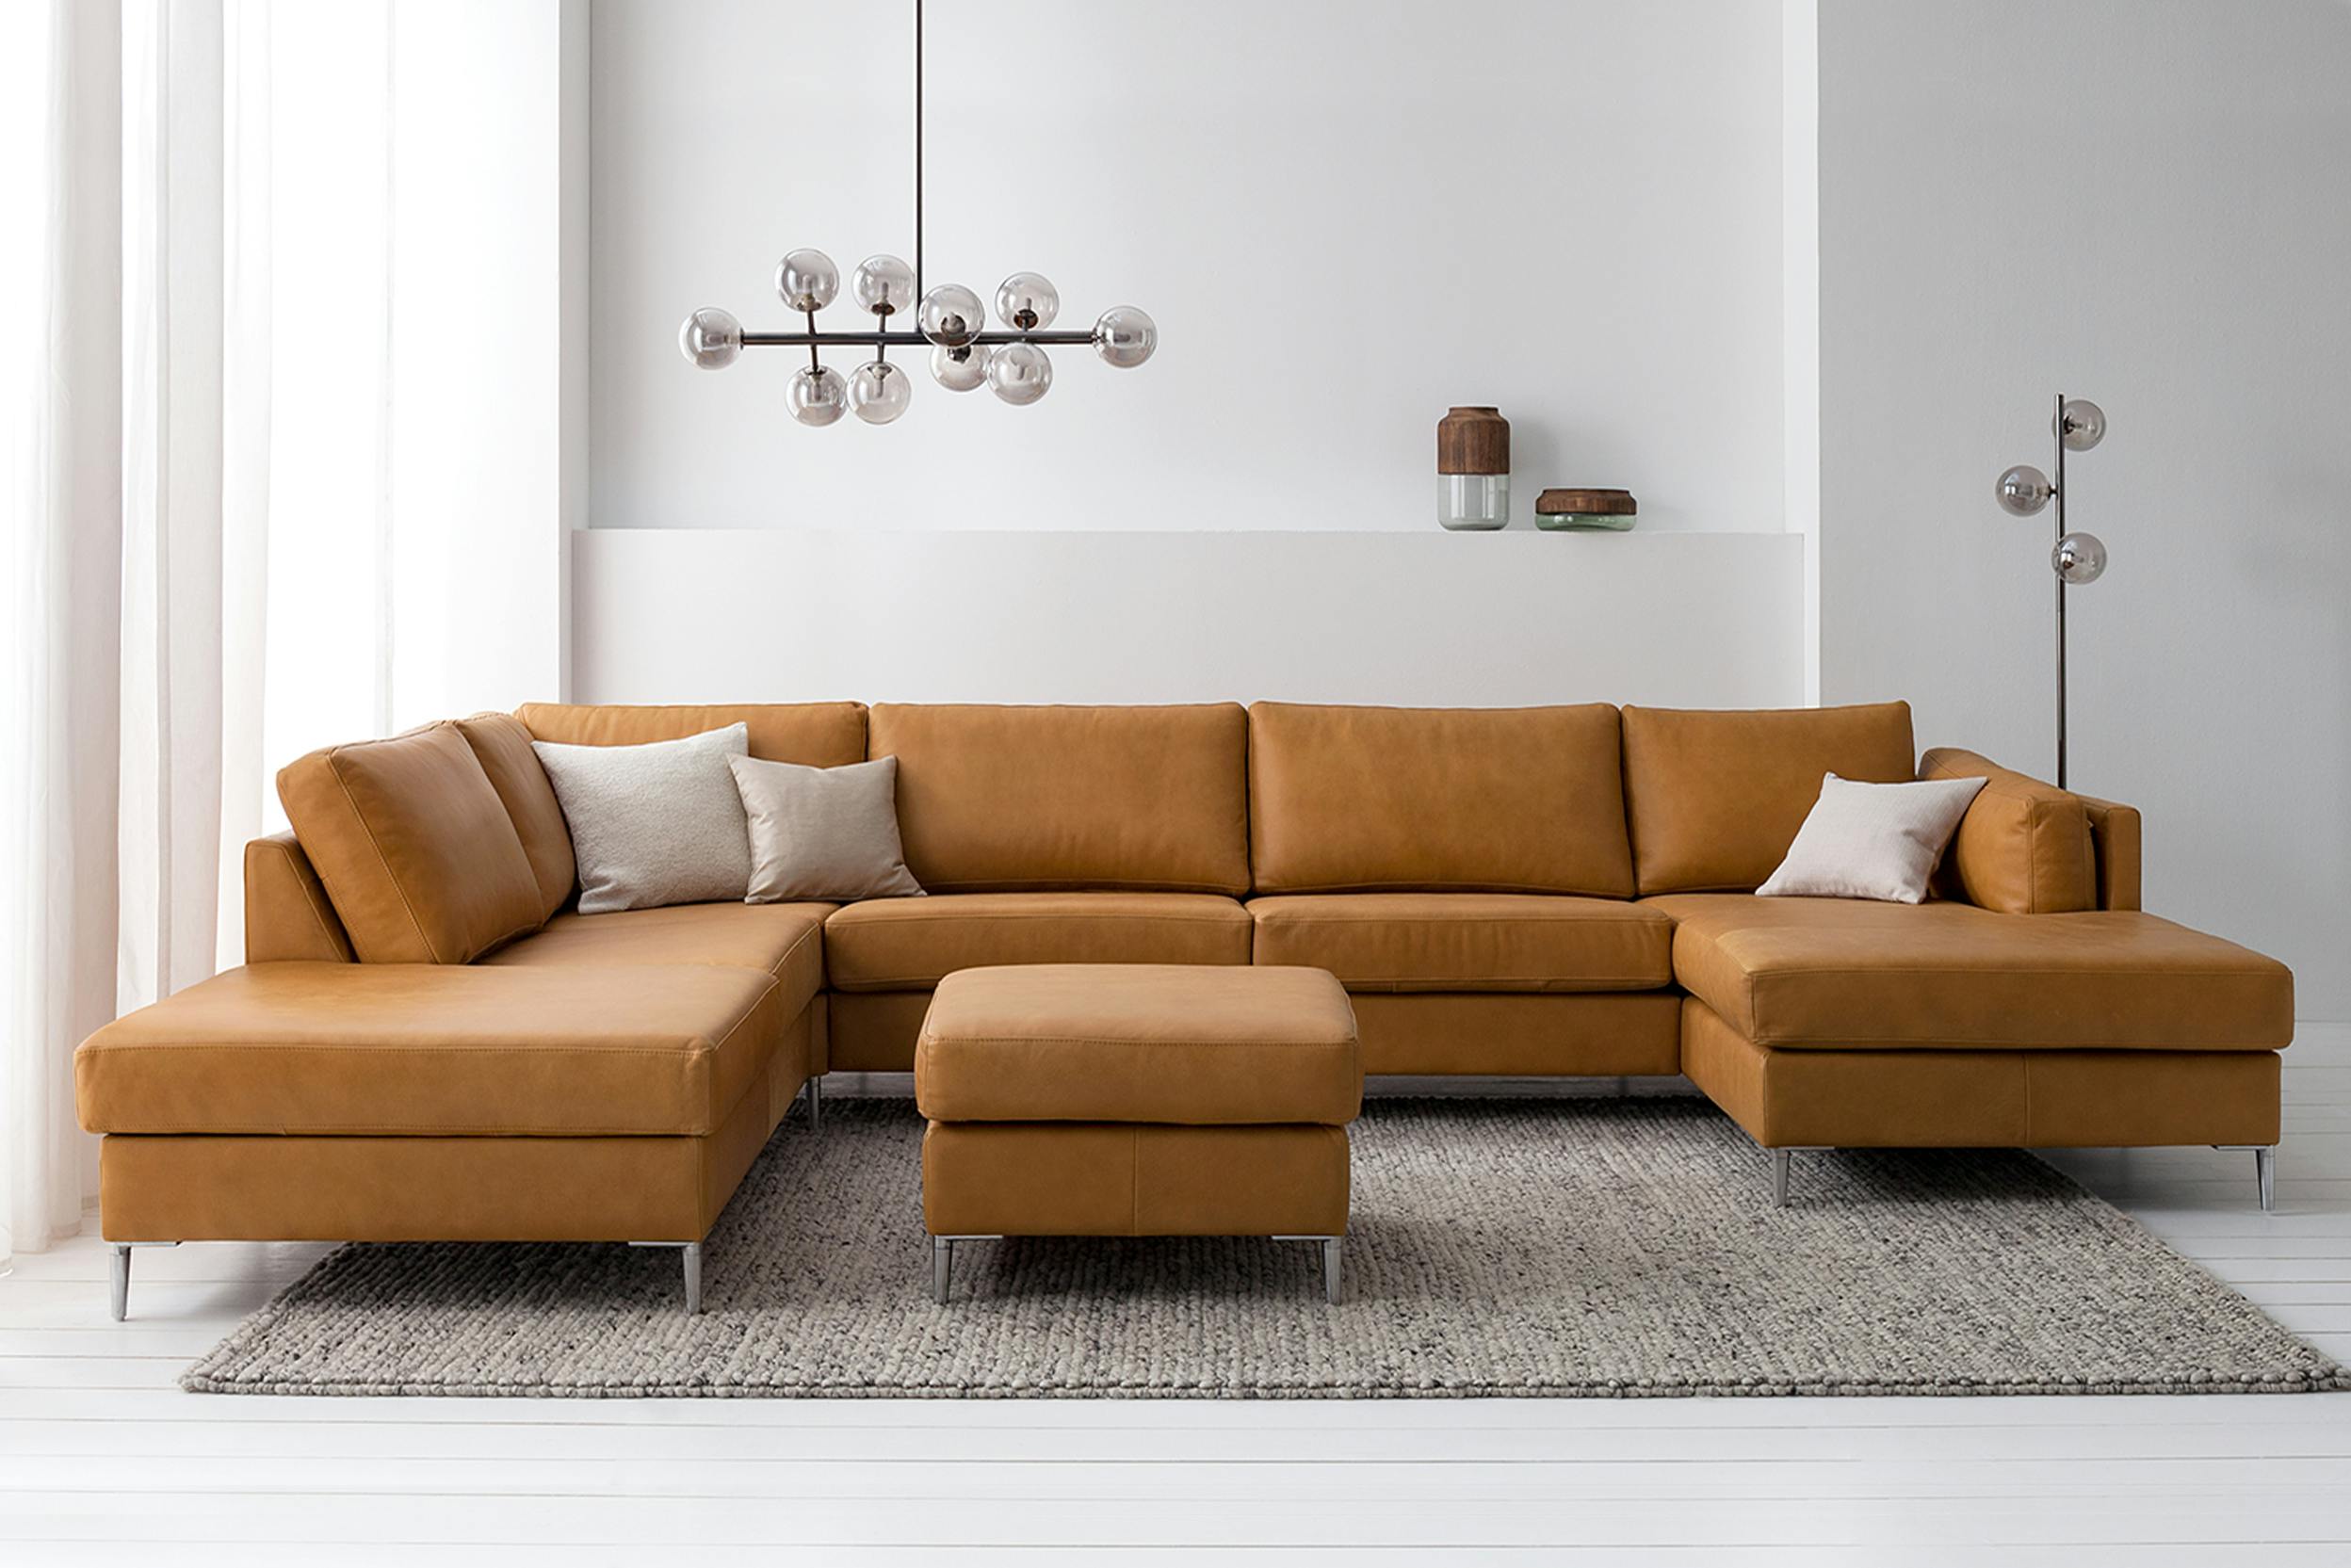 Cerdito es suficiente rompecabezas Welches Material ist besser fürs Sofa? | home24